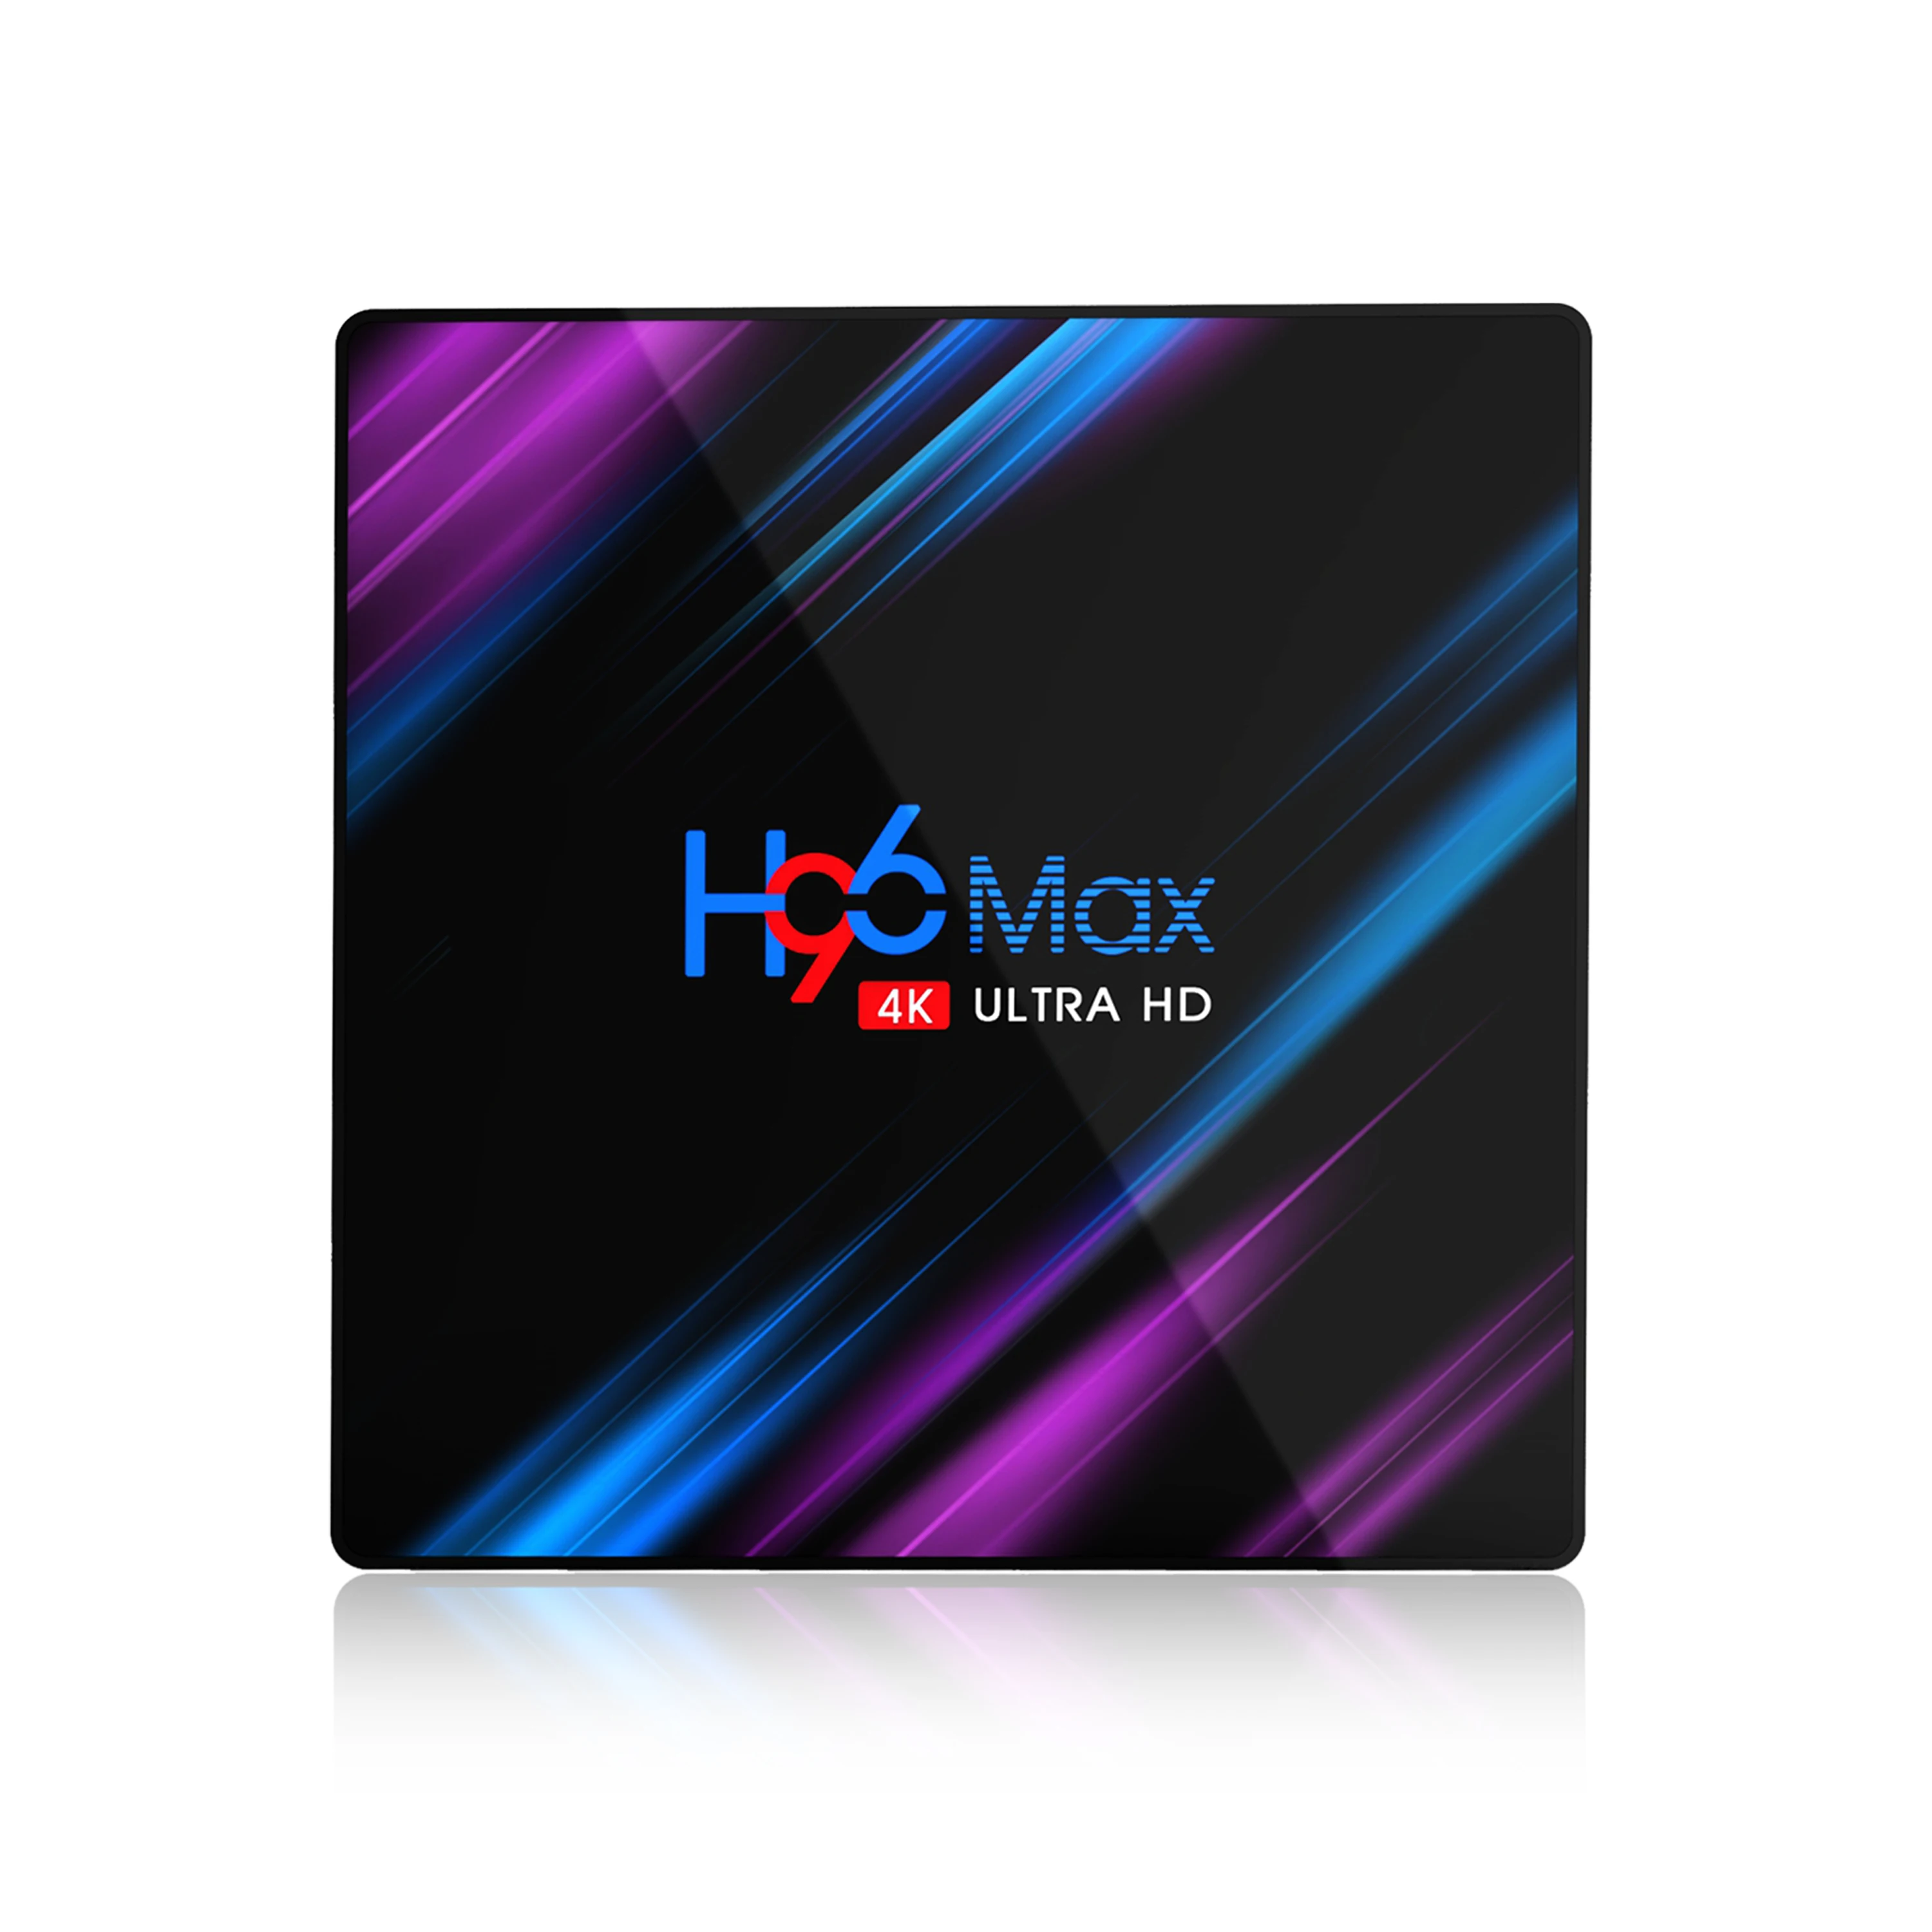 
2019 Factory rockchip H96 max rk3318 quad core 4k hd smart android 10.0 tv box H96max RK3318 chip ott stb 